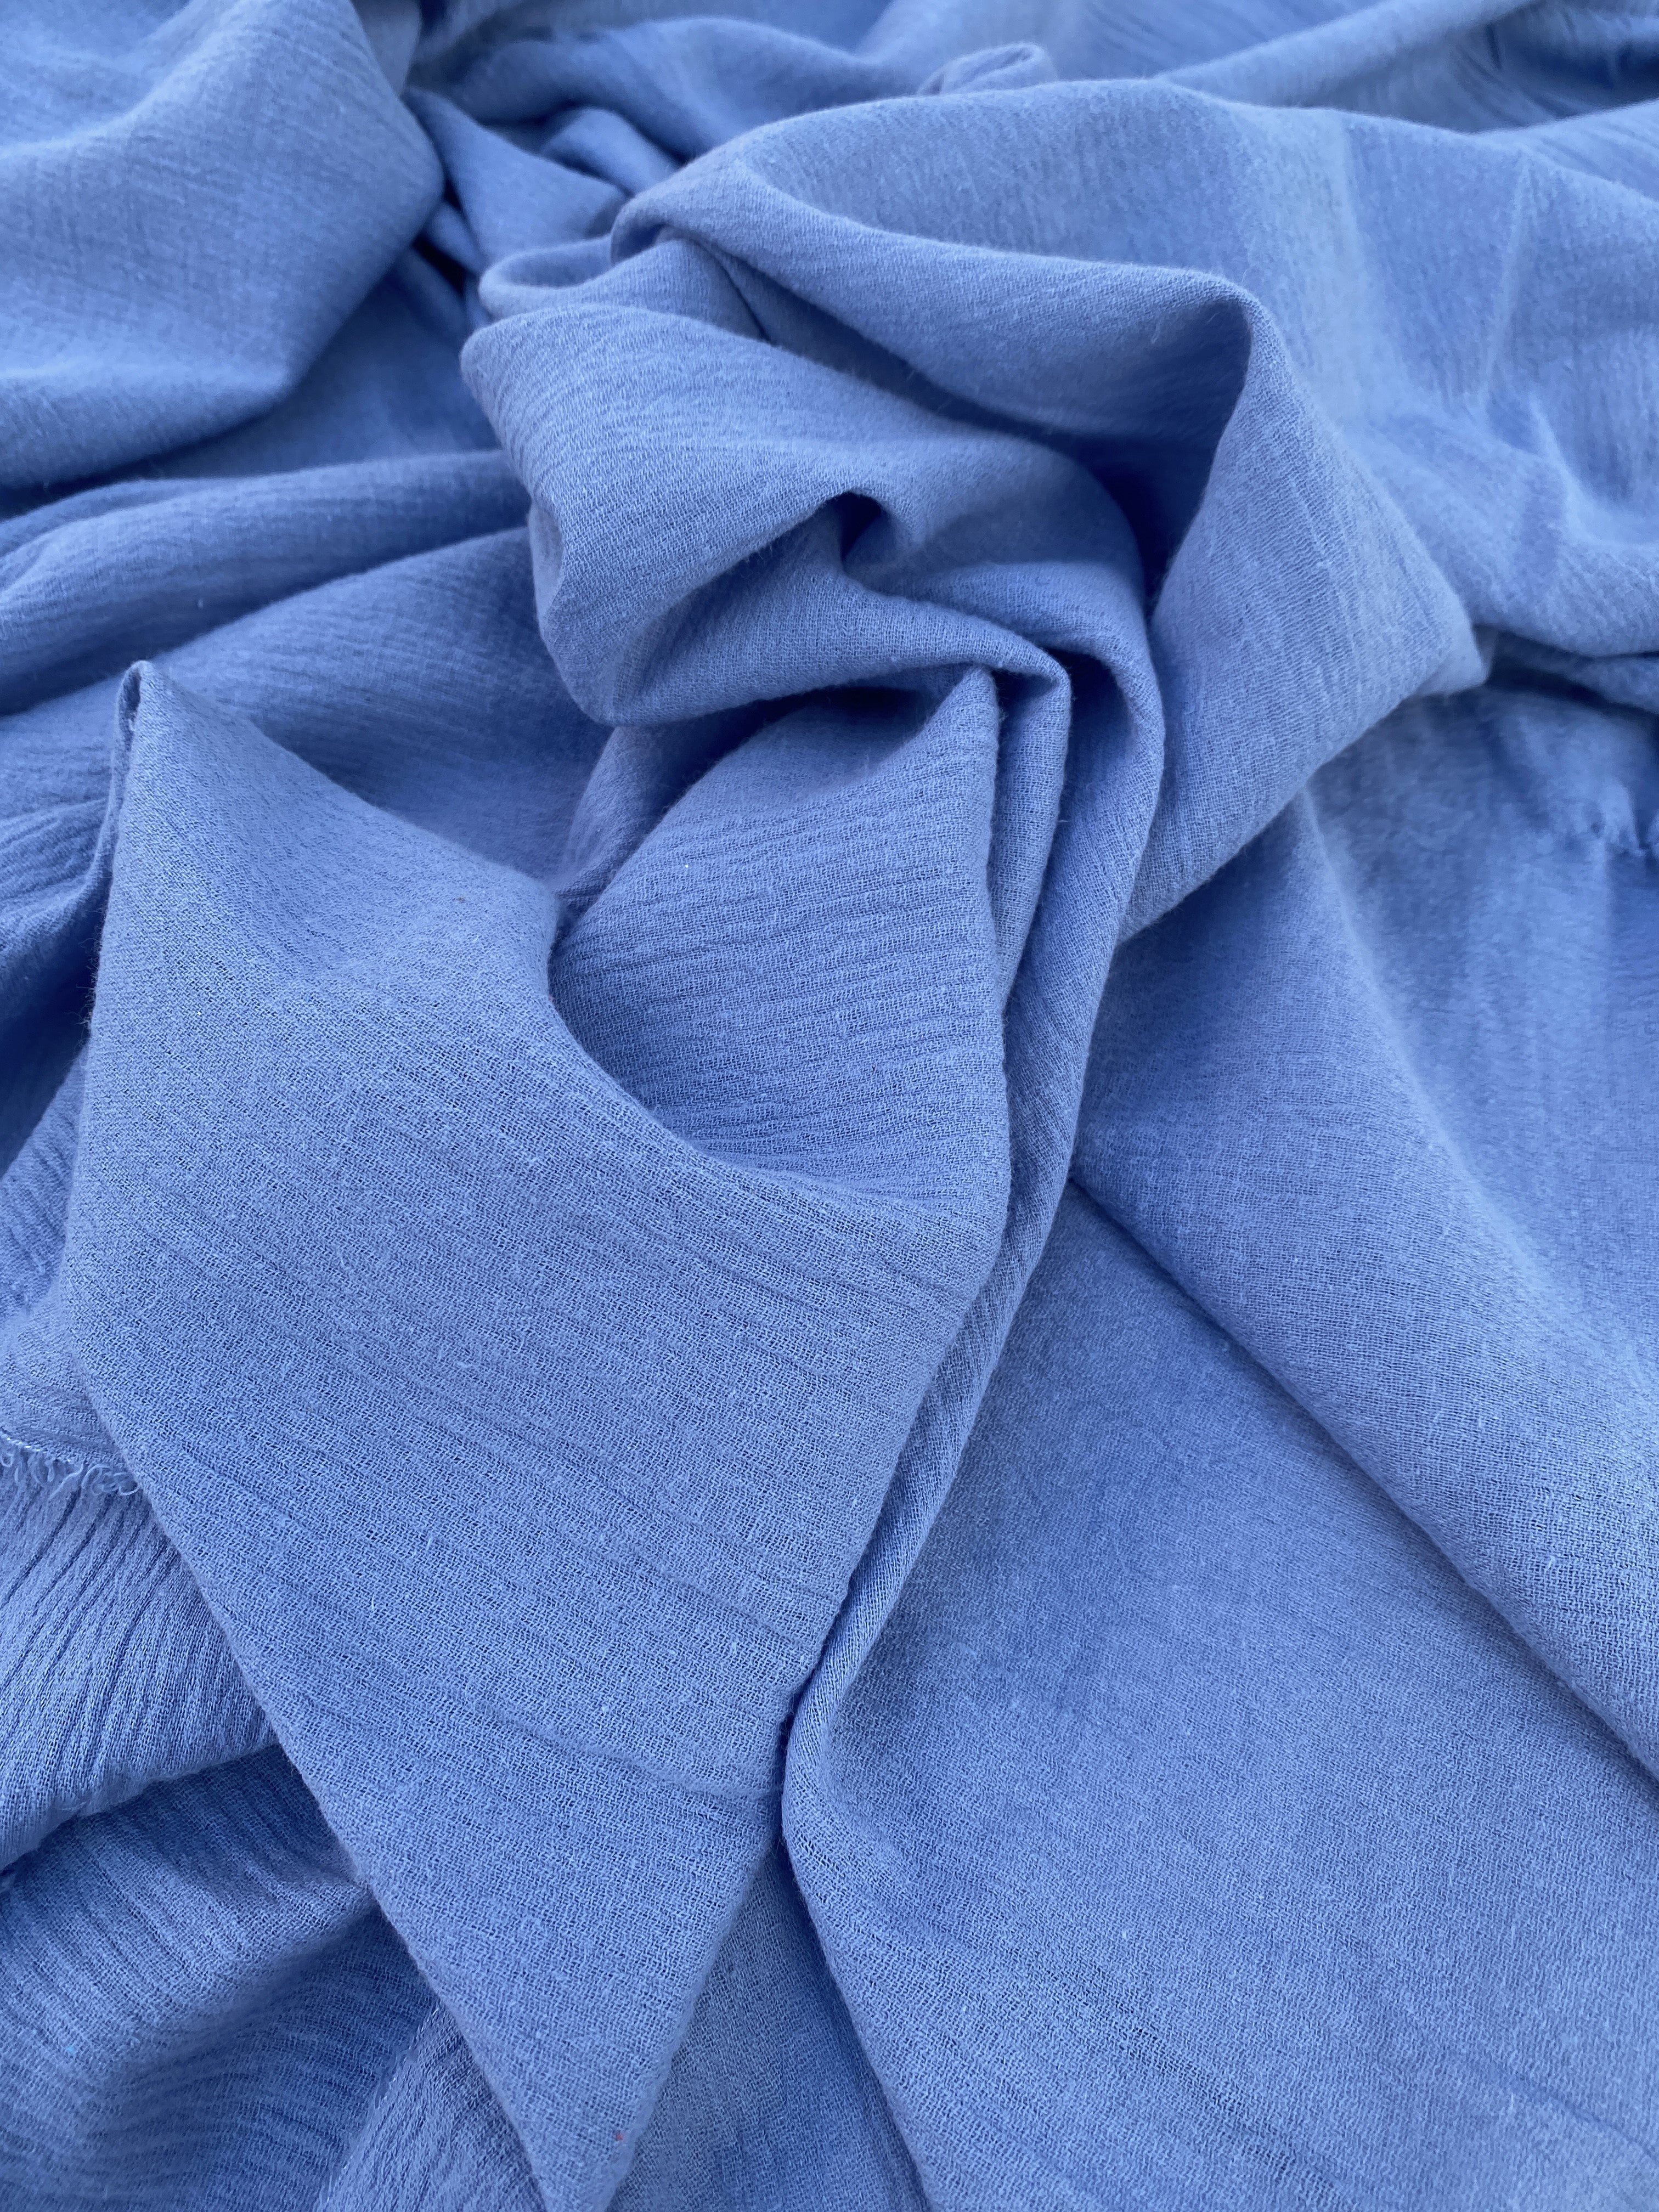 Denim Blue Muslin Crinkle Gauze Fabric, Dusty Blue Cotton Gauze Swaddle Fabric, Fabric for Babies, Swaddle, dresses, Blue Cheesecloth Fabric